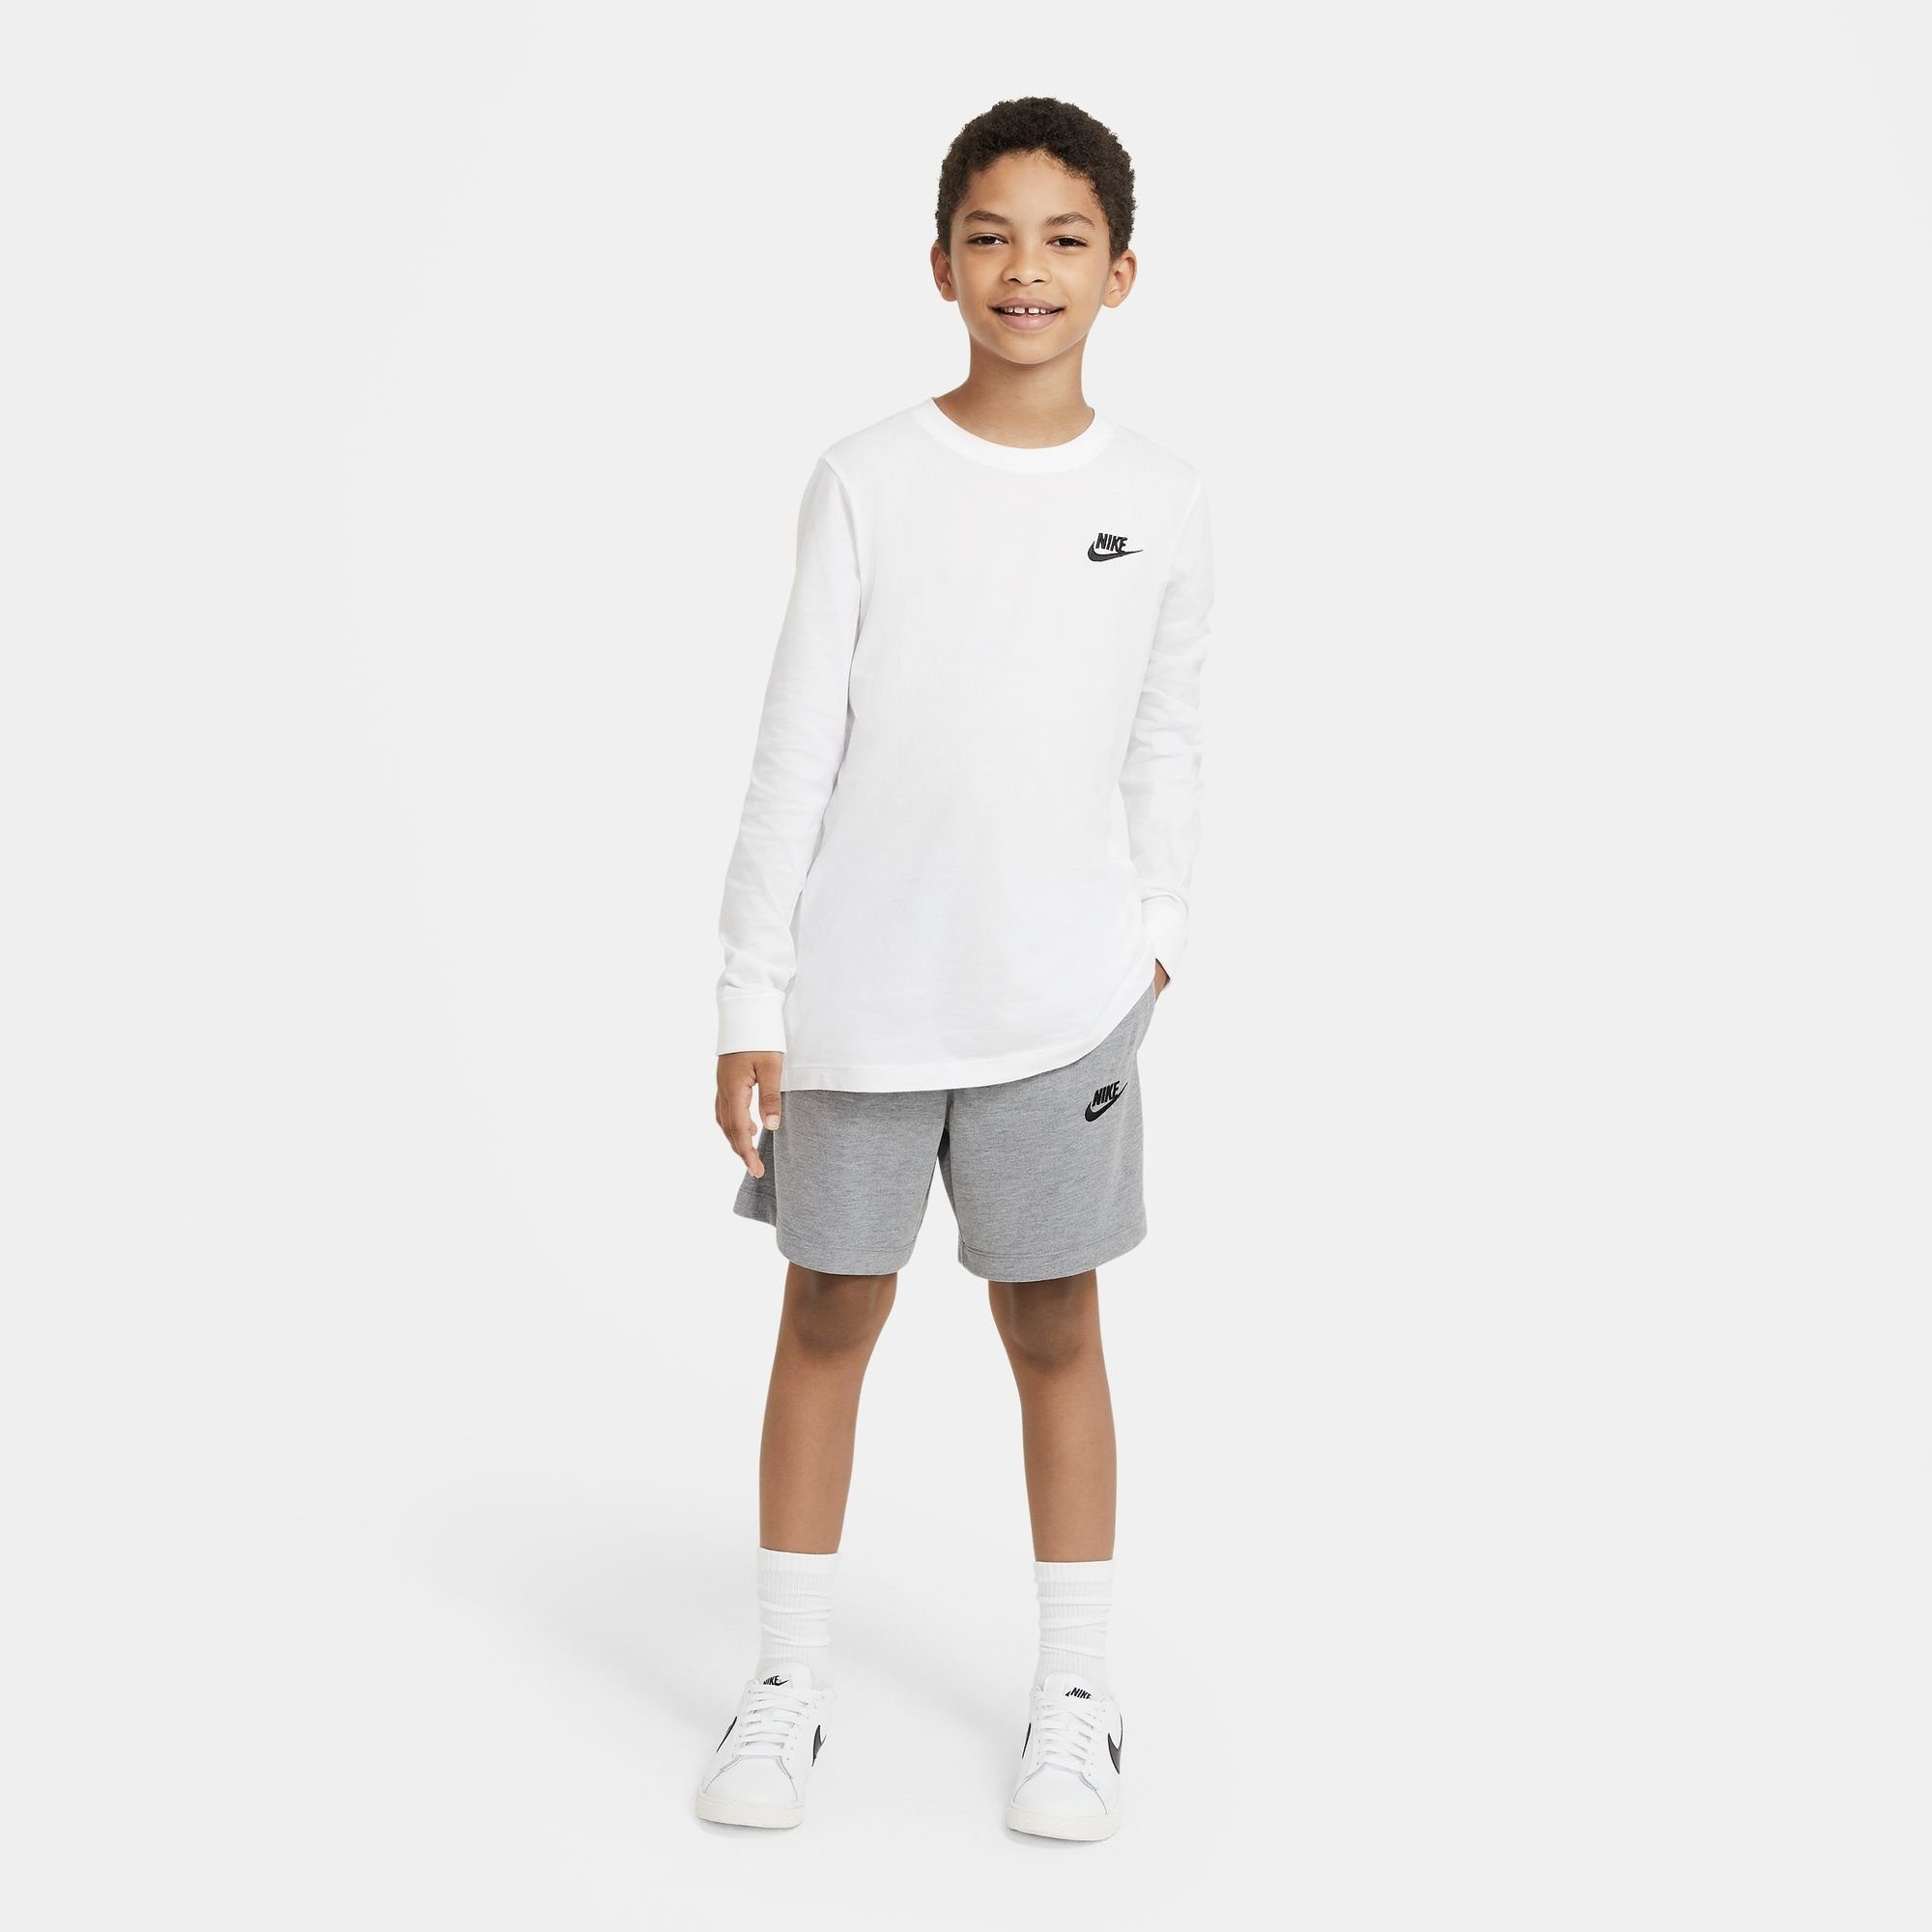 JERSEY grau BIG Shorts KIDS' (BOYS) SHORTS Sportswear Nike